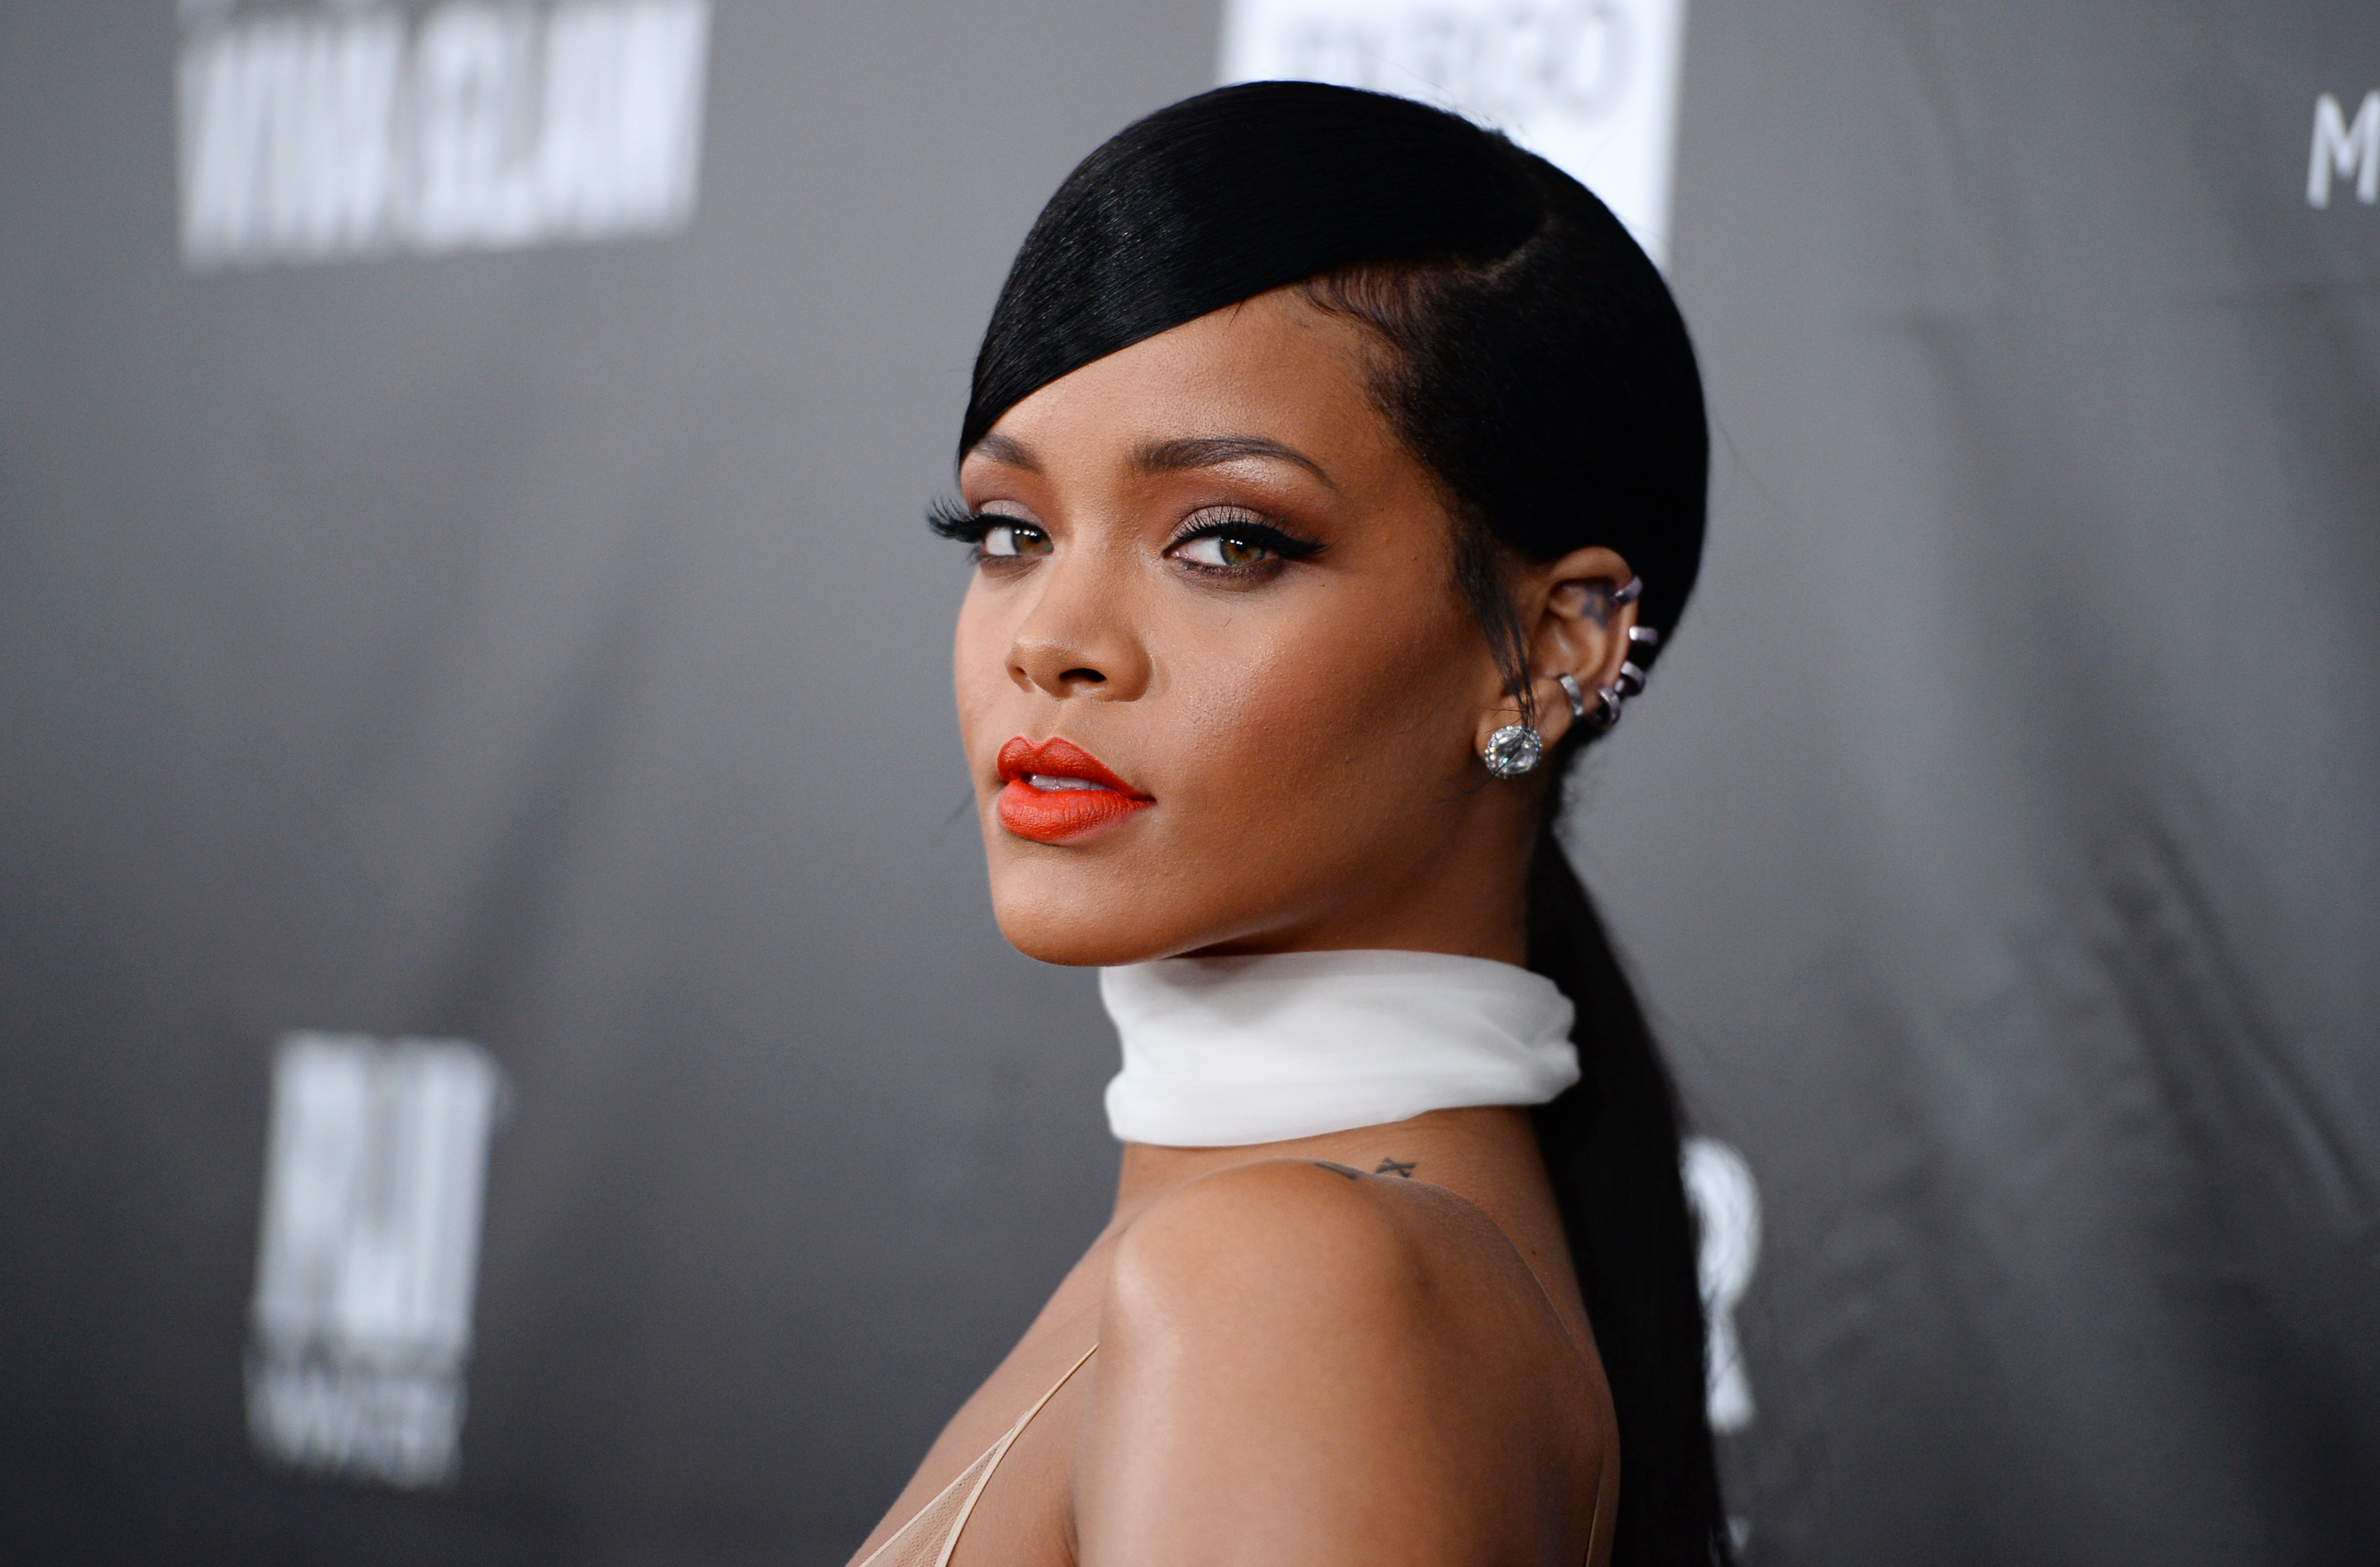 Rihanna cancels Nice concert after attack